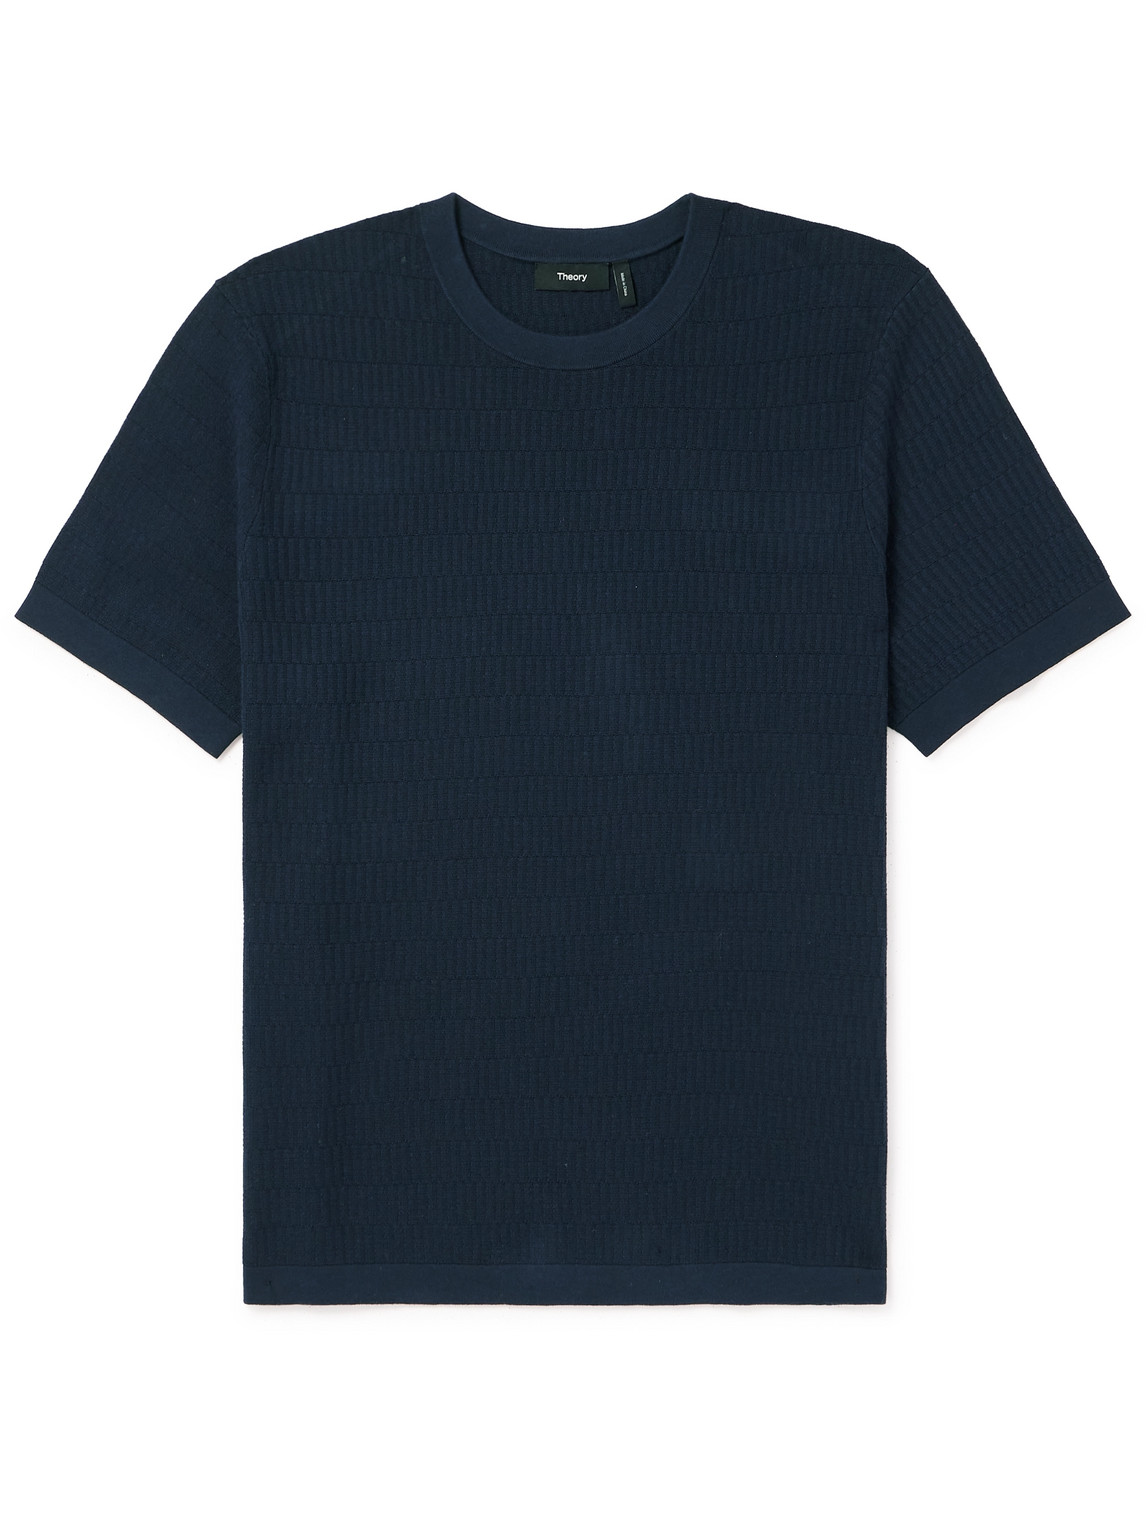 Theory Damian Cotton-blend T-shirt In Baltic